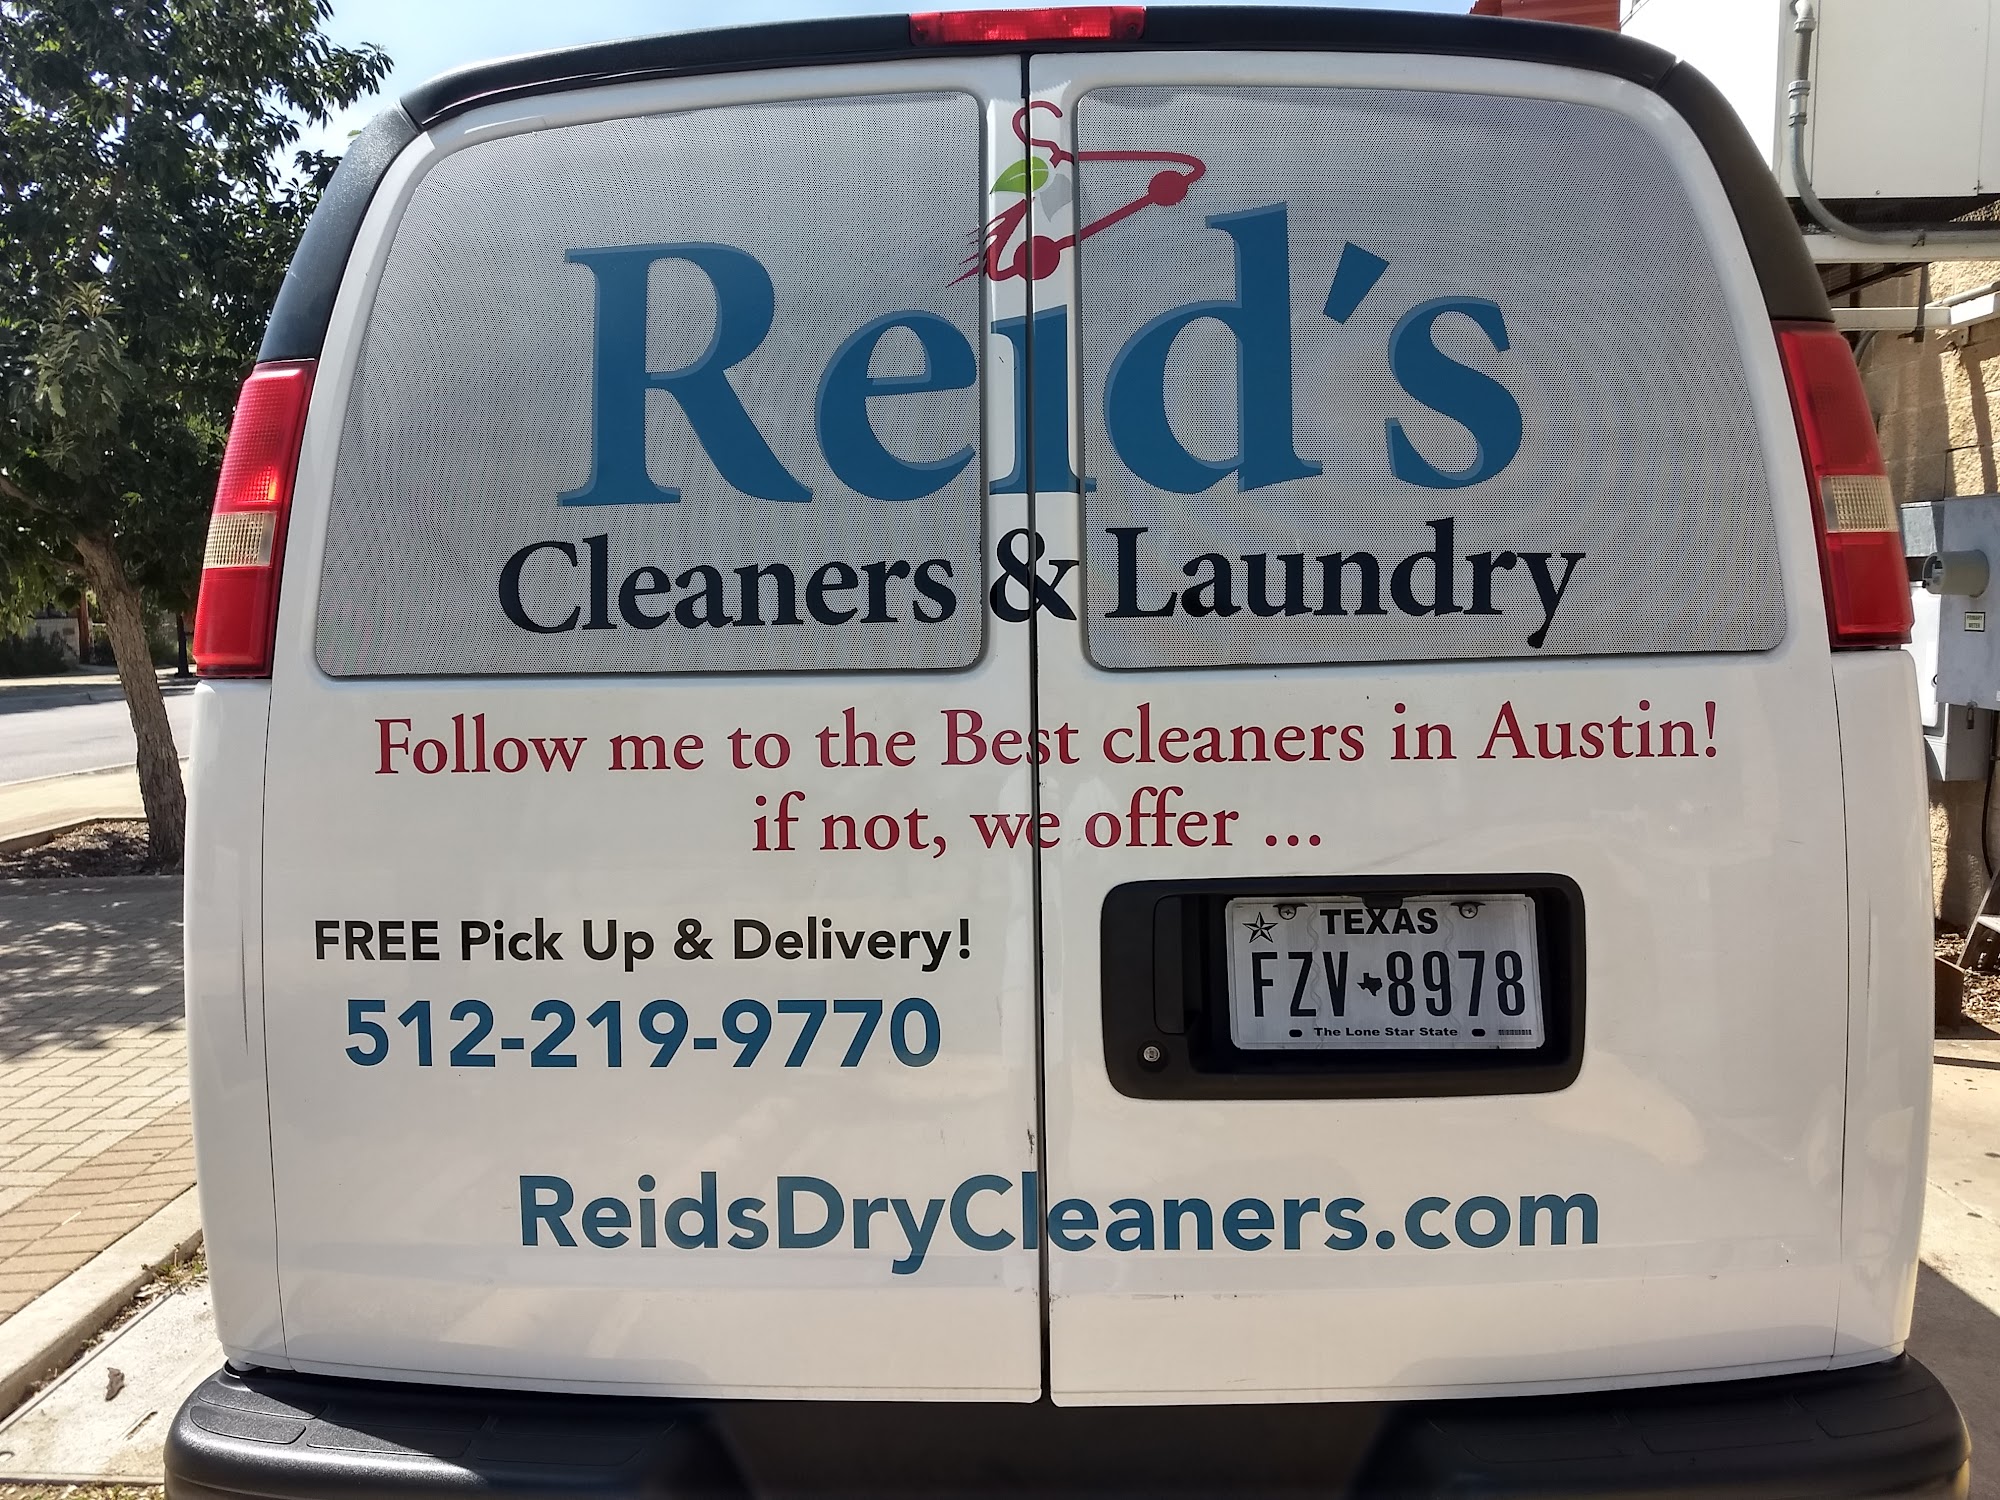 Reid's Cleaners & Laundry